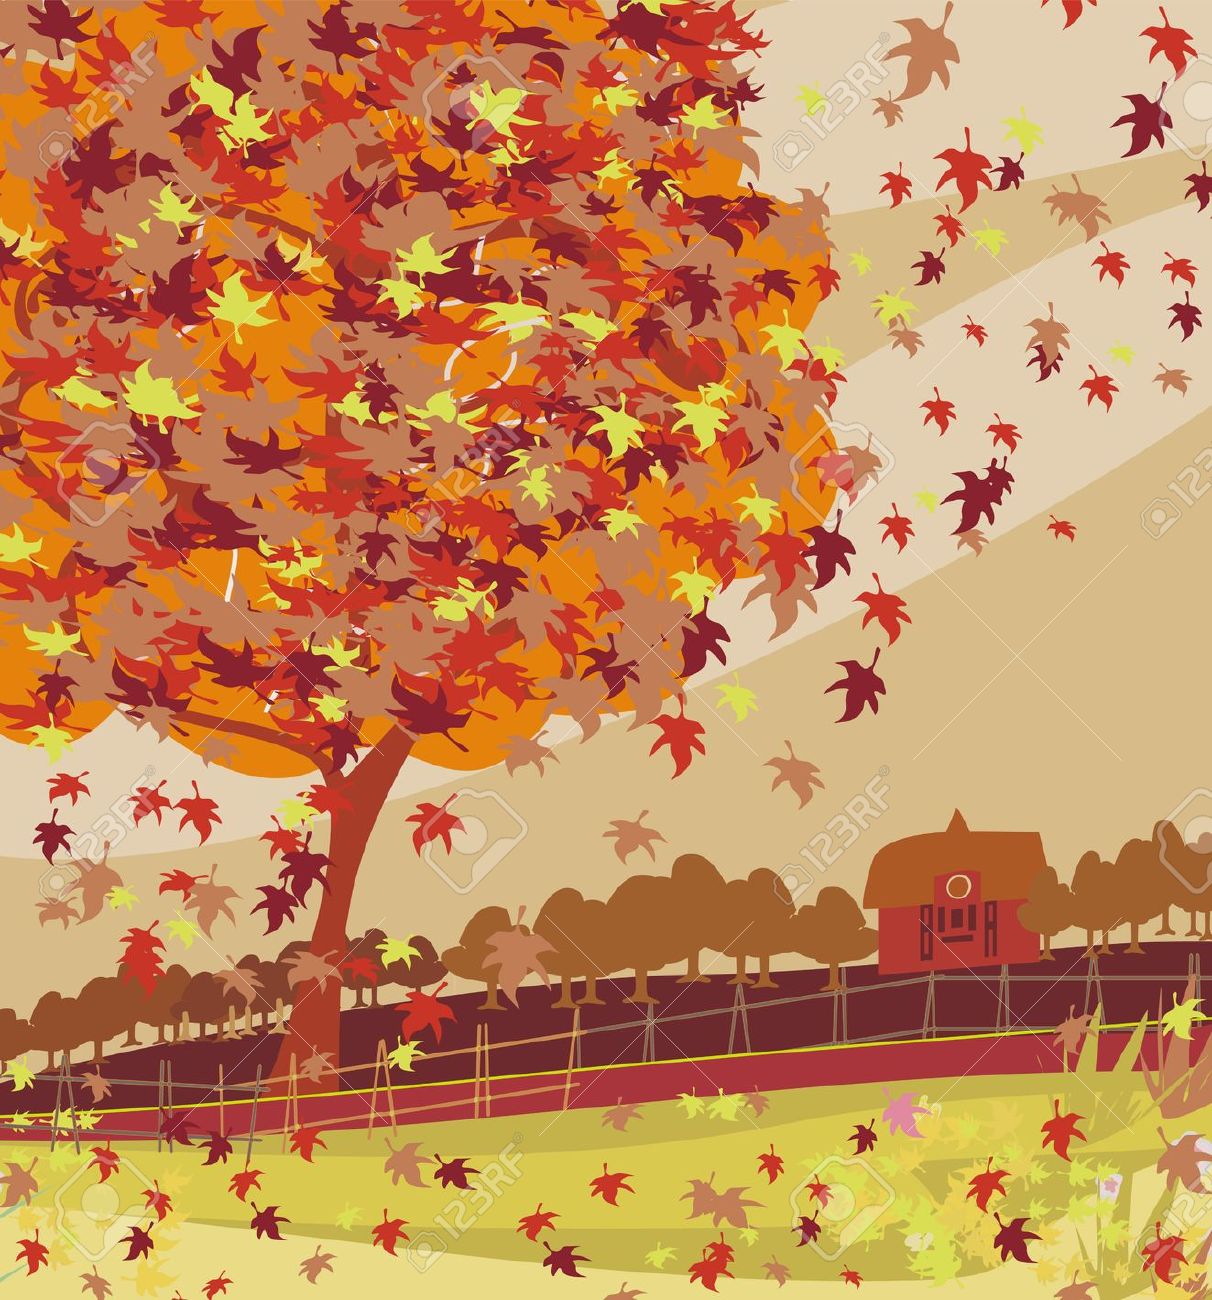 free clipart autumn scenes - photo #6